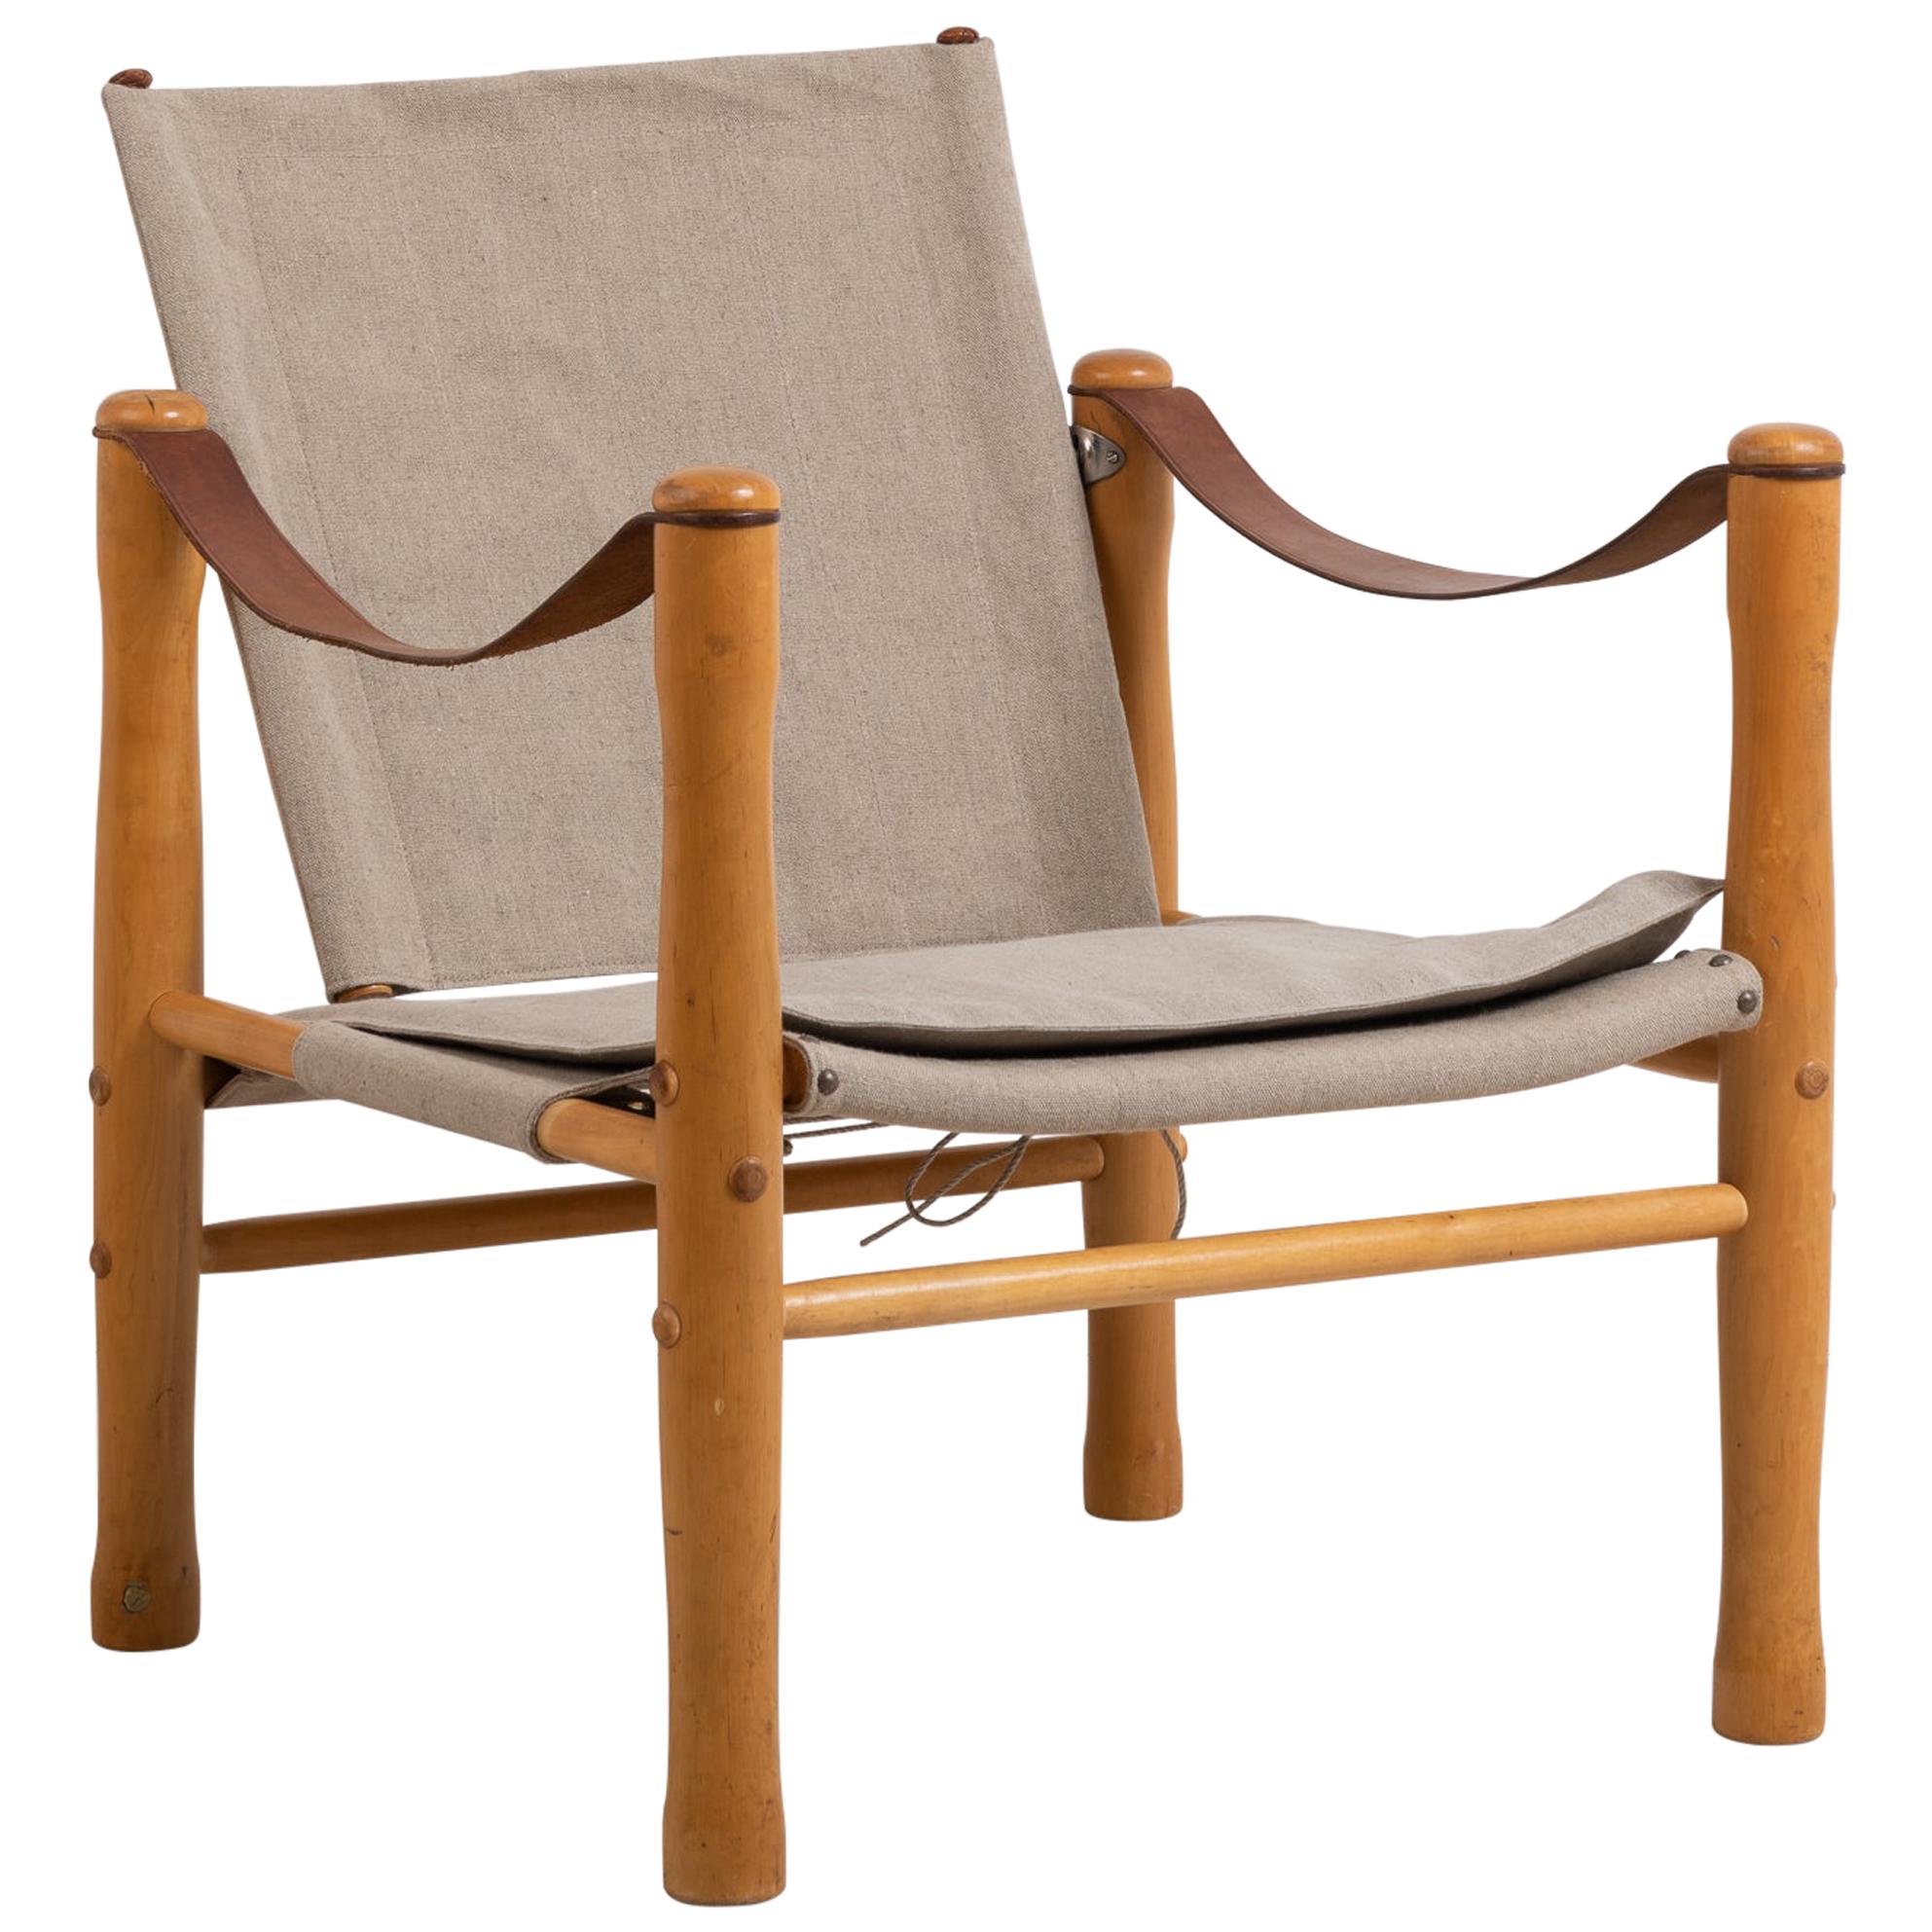 Safari Chair by Elias Svedberg for NK